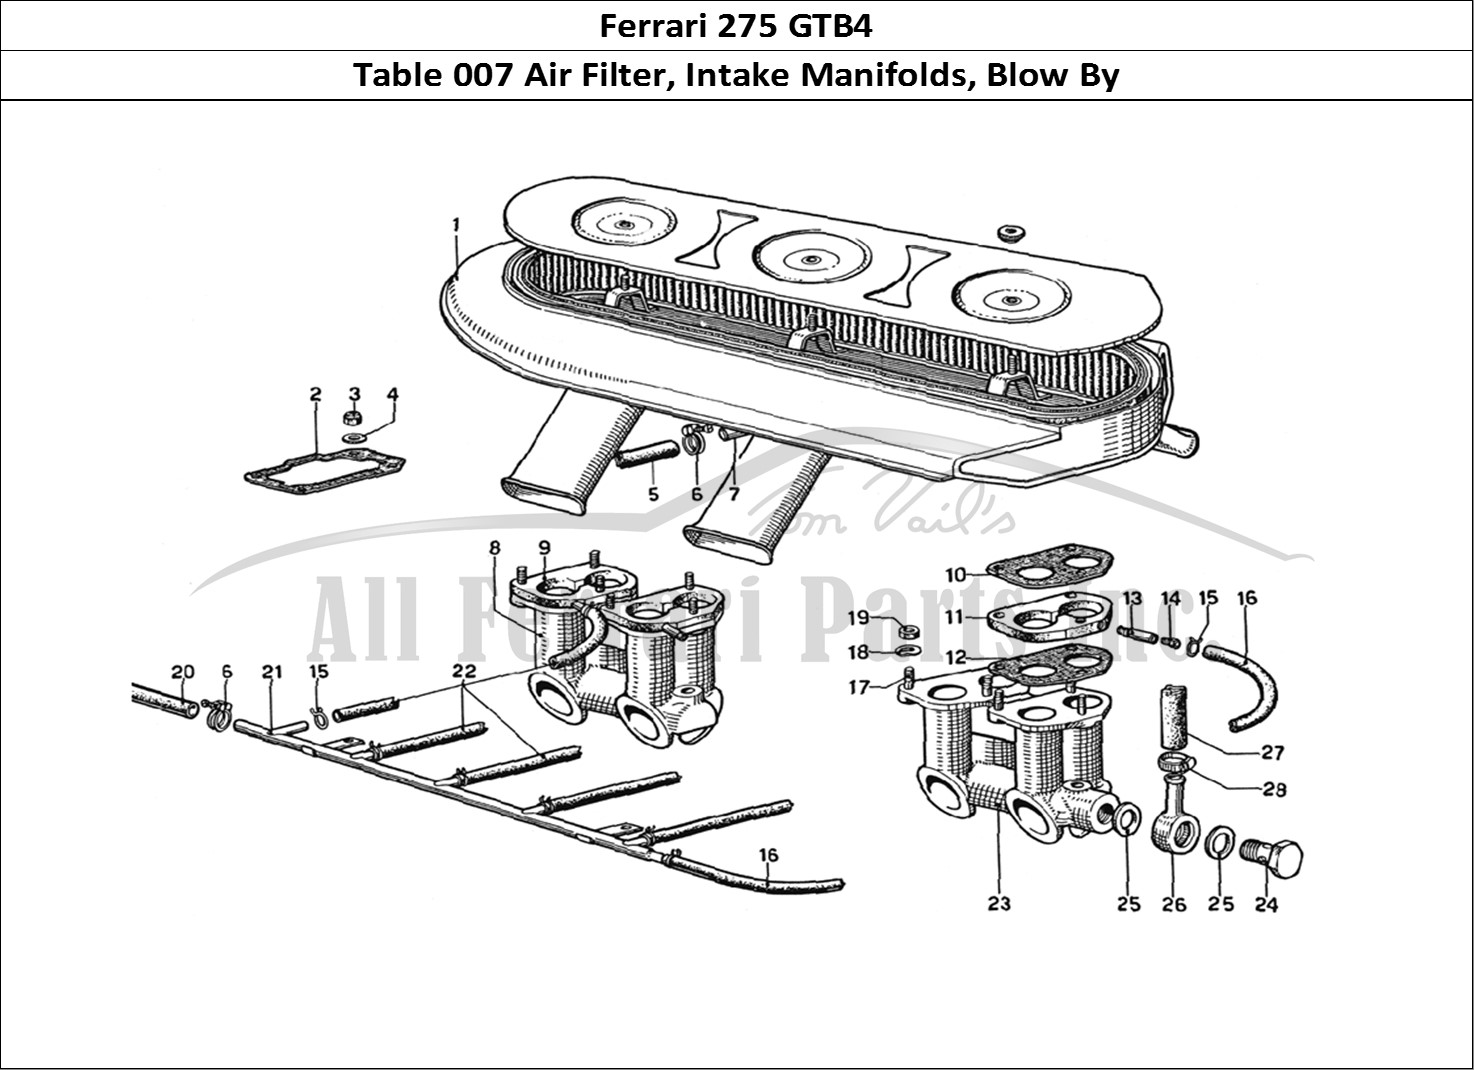 Ferrari Parts Ferrari 275 GTB4 Page 007 Air Filter - Manifolds -